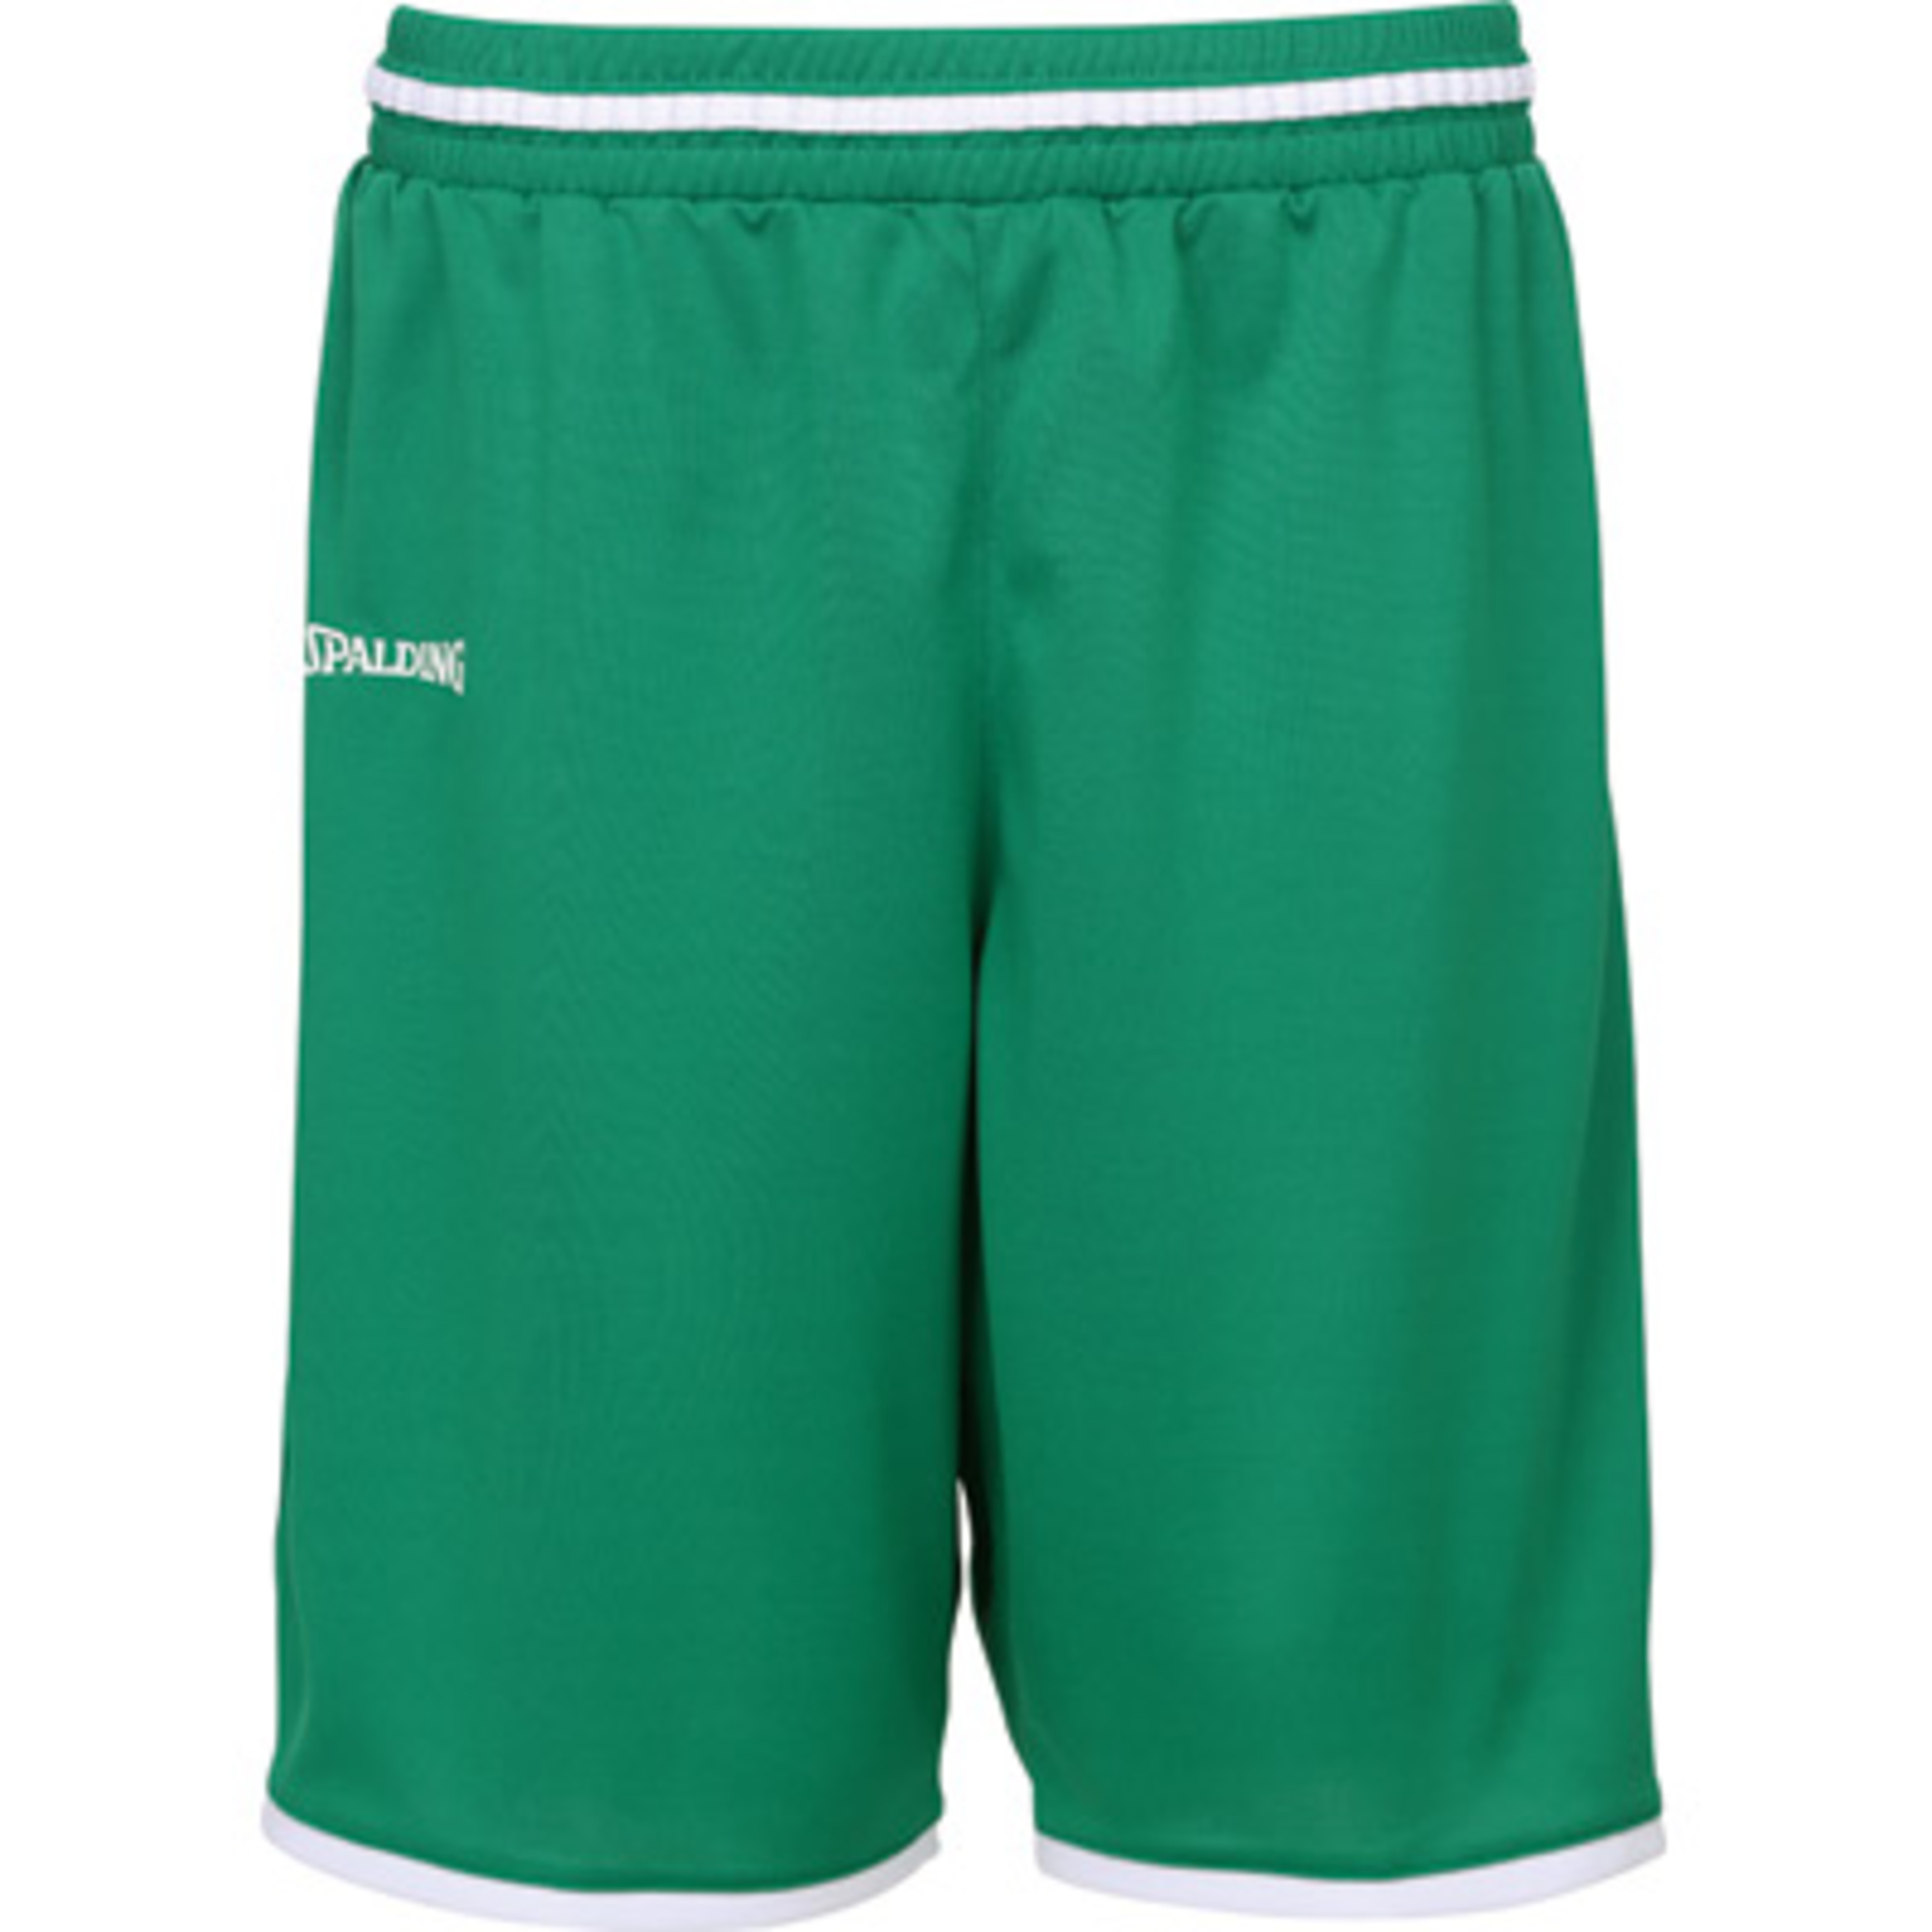 Move Shorts Verde Lagoon/blanco Spalding - verde - 